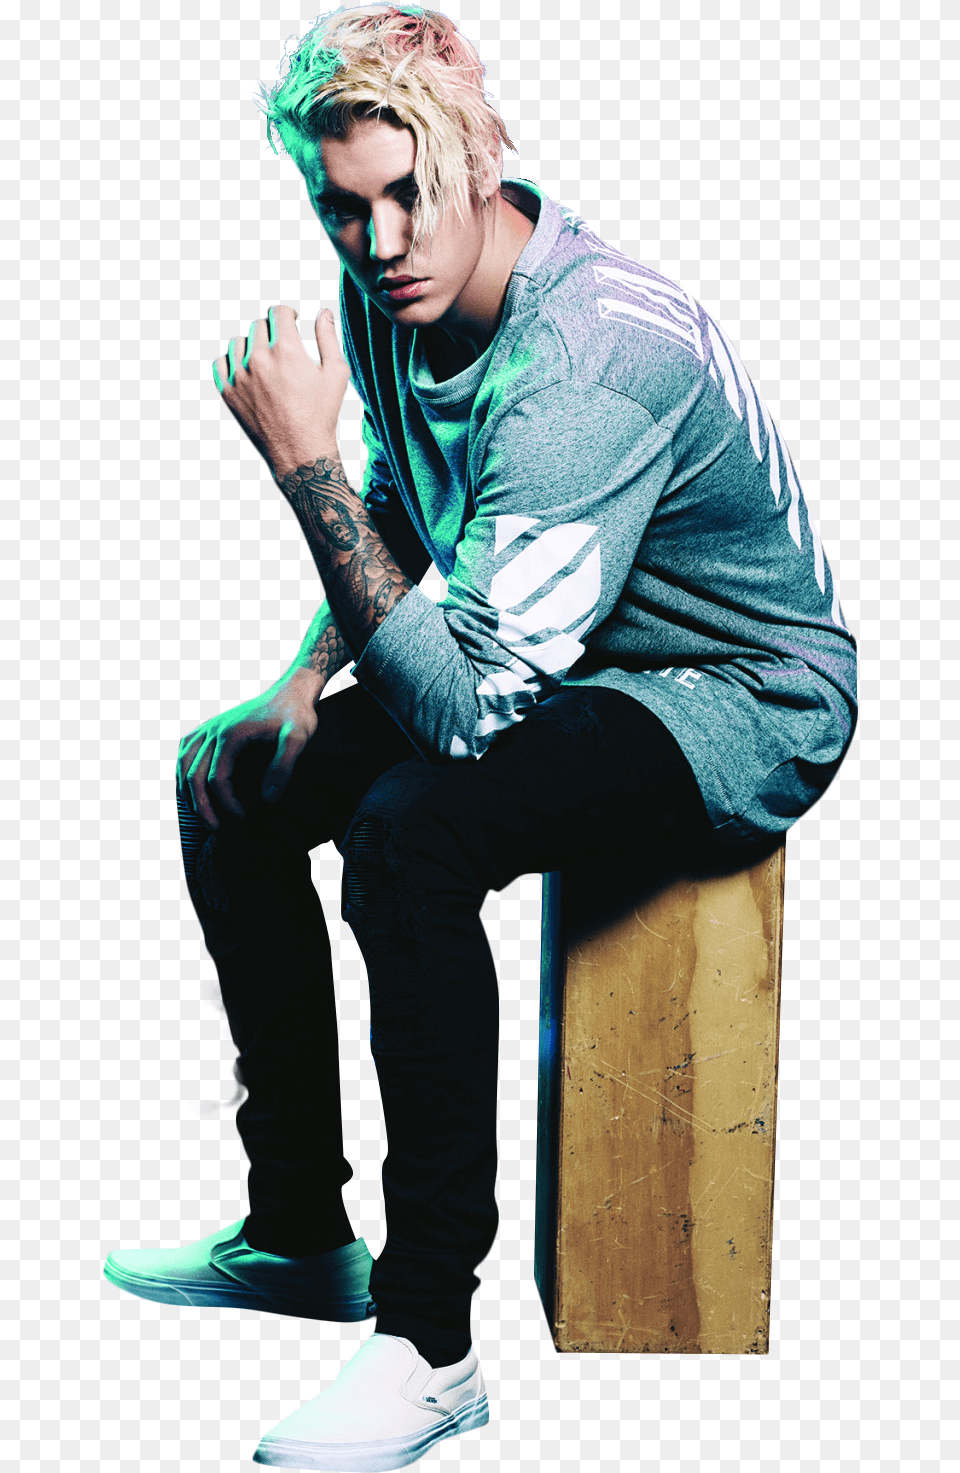 Justin Bieber Green Light Image For Justin Bieber Hd Wallpaper 2020, Adult, Male, Pants, Hand Png